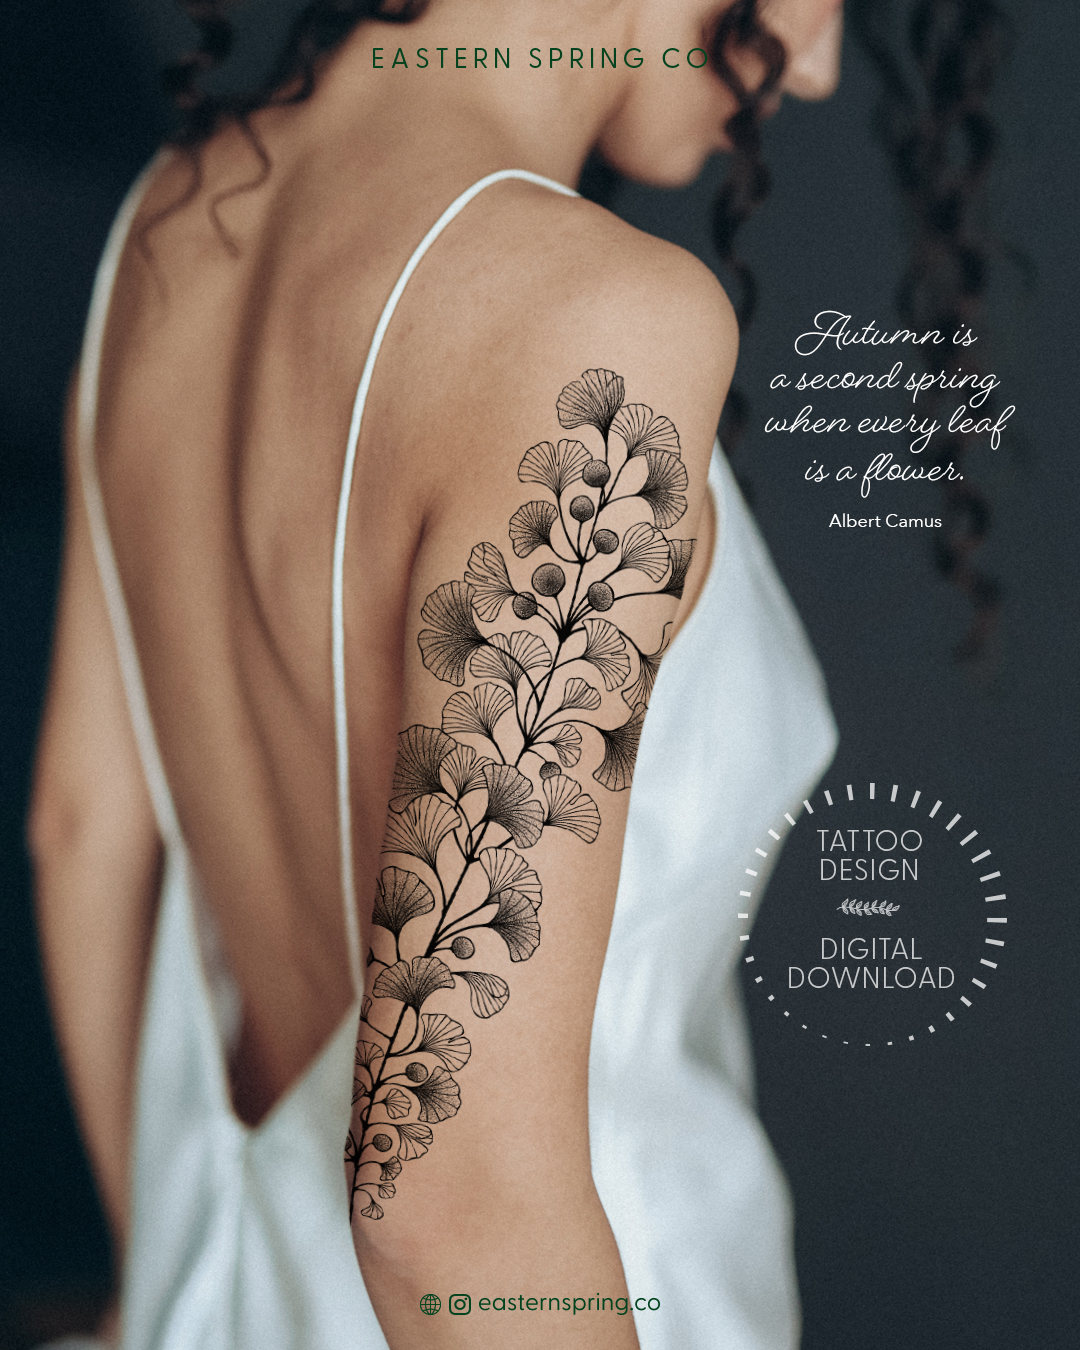 Eastern Spring Co artistic tattoo design, Ginkgo Leaves